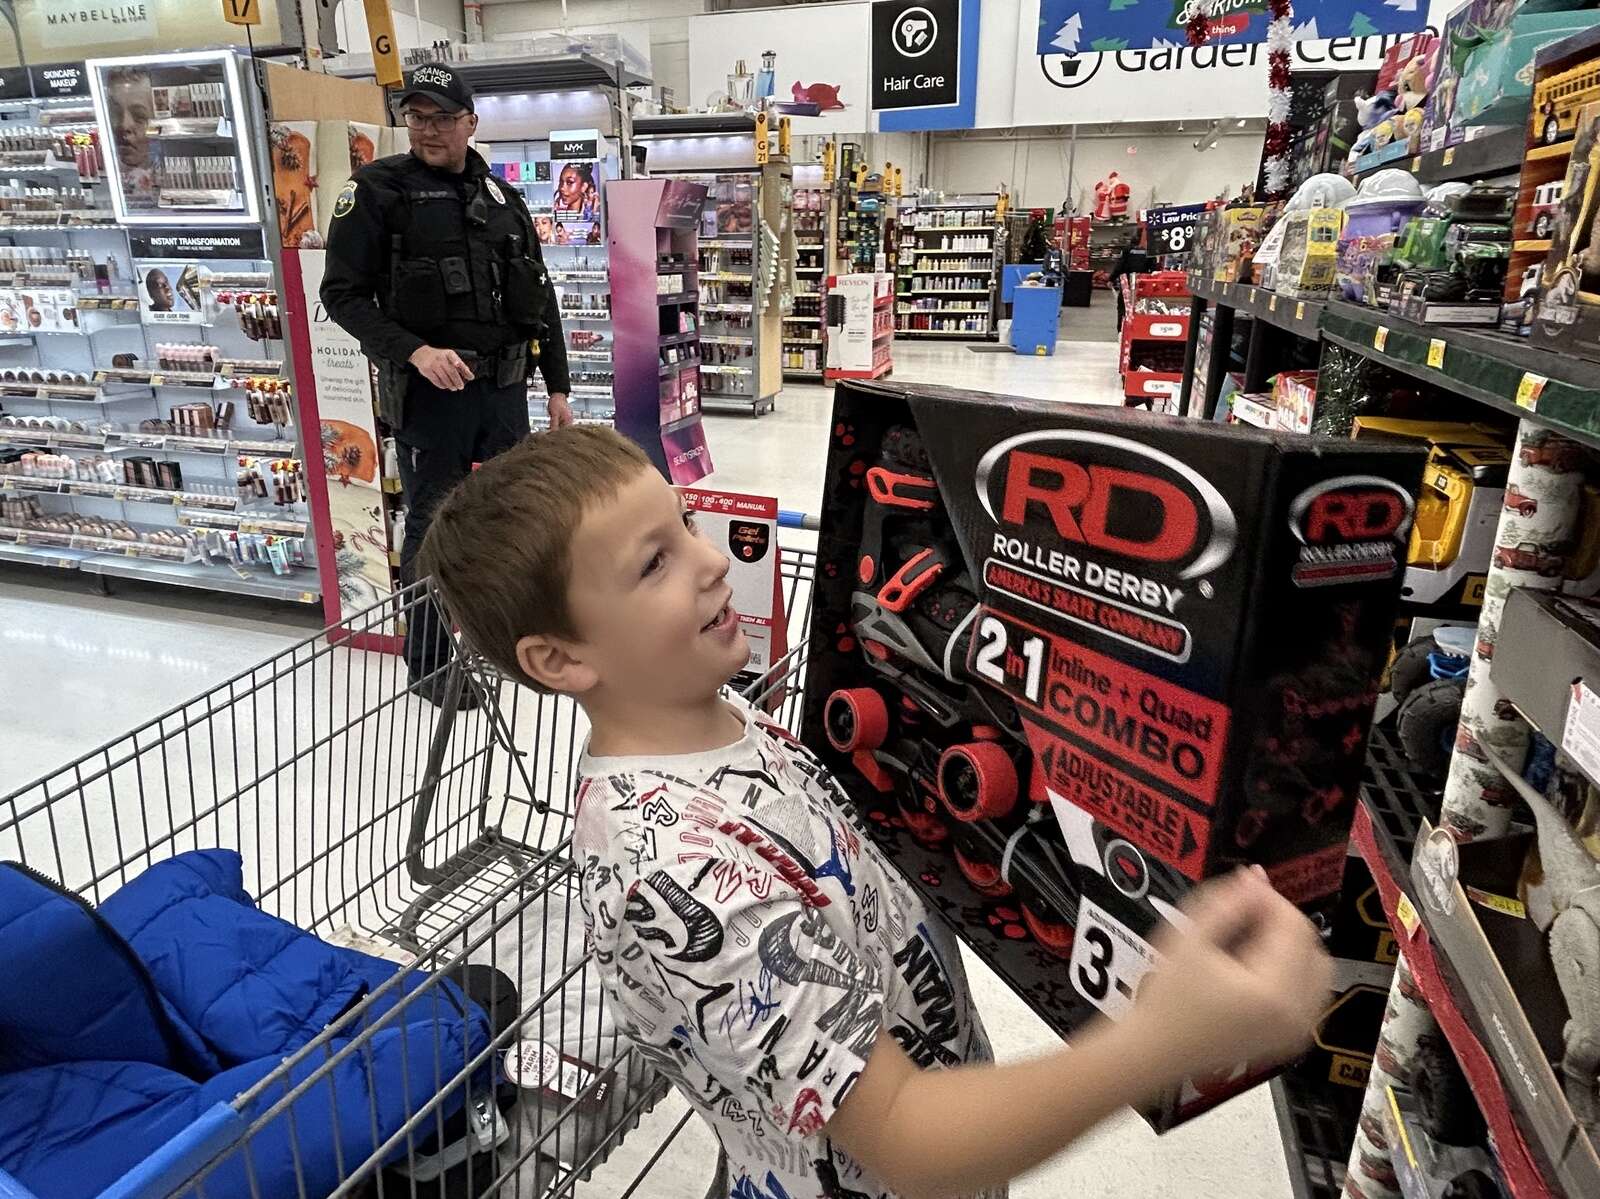 125 Durango-area children 'Shop with a Cop' at Walmart – The